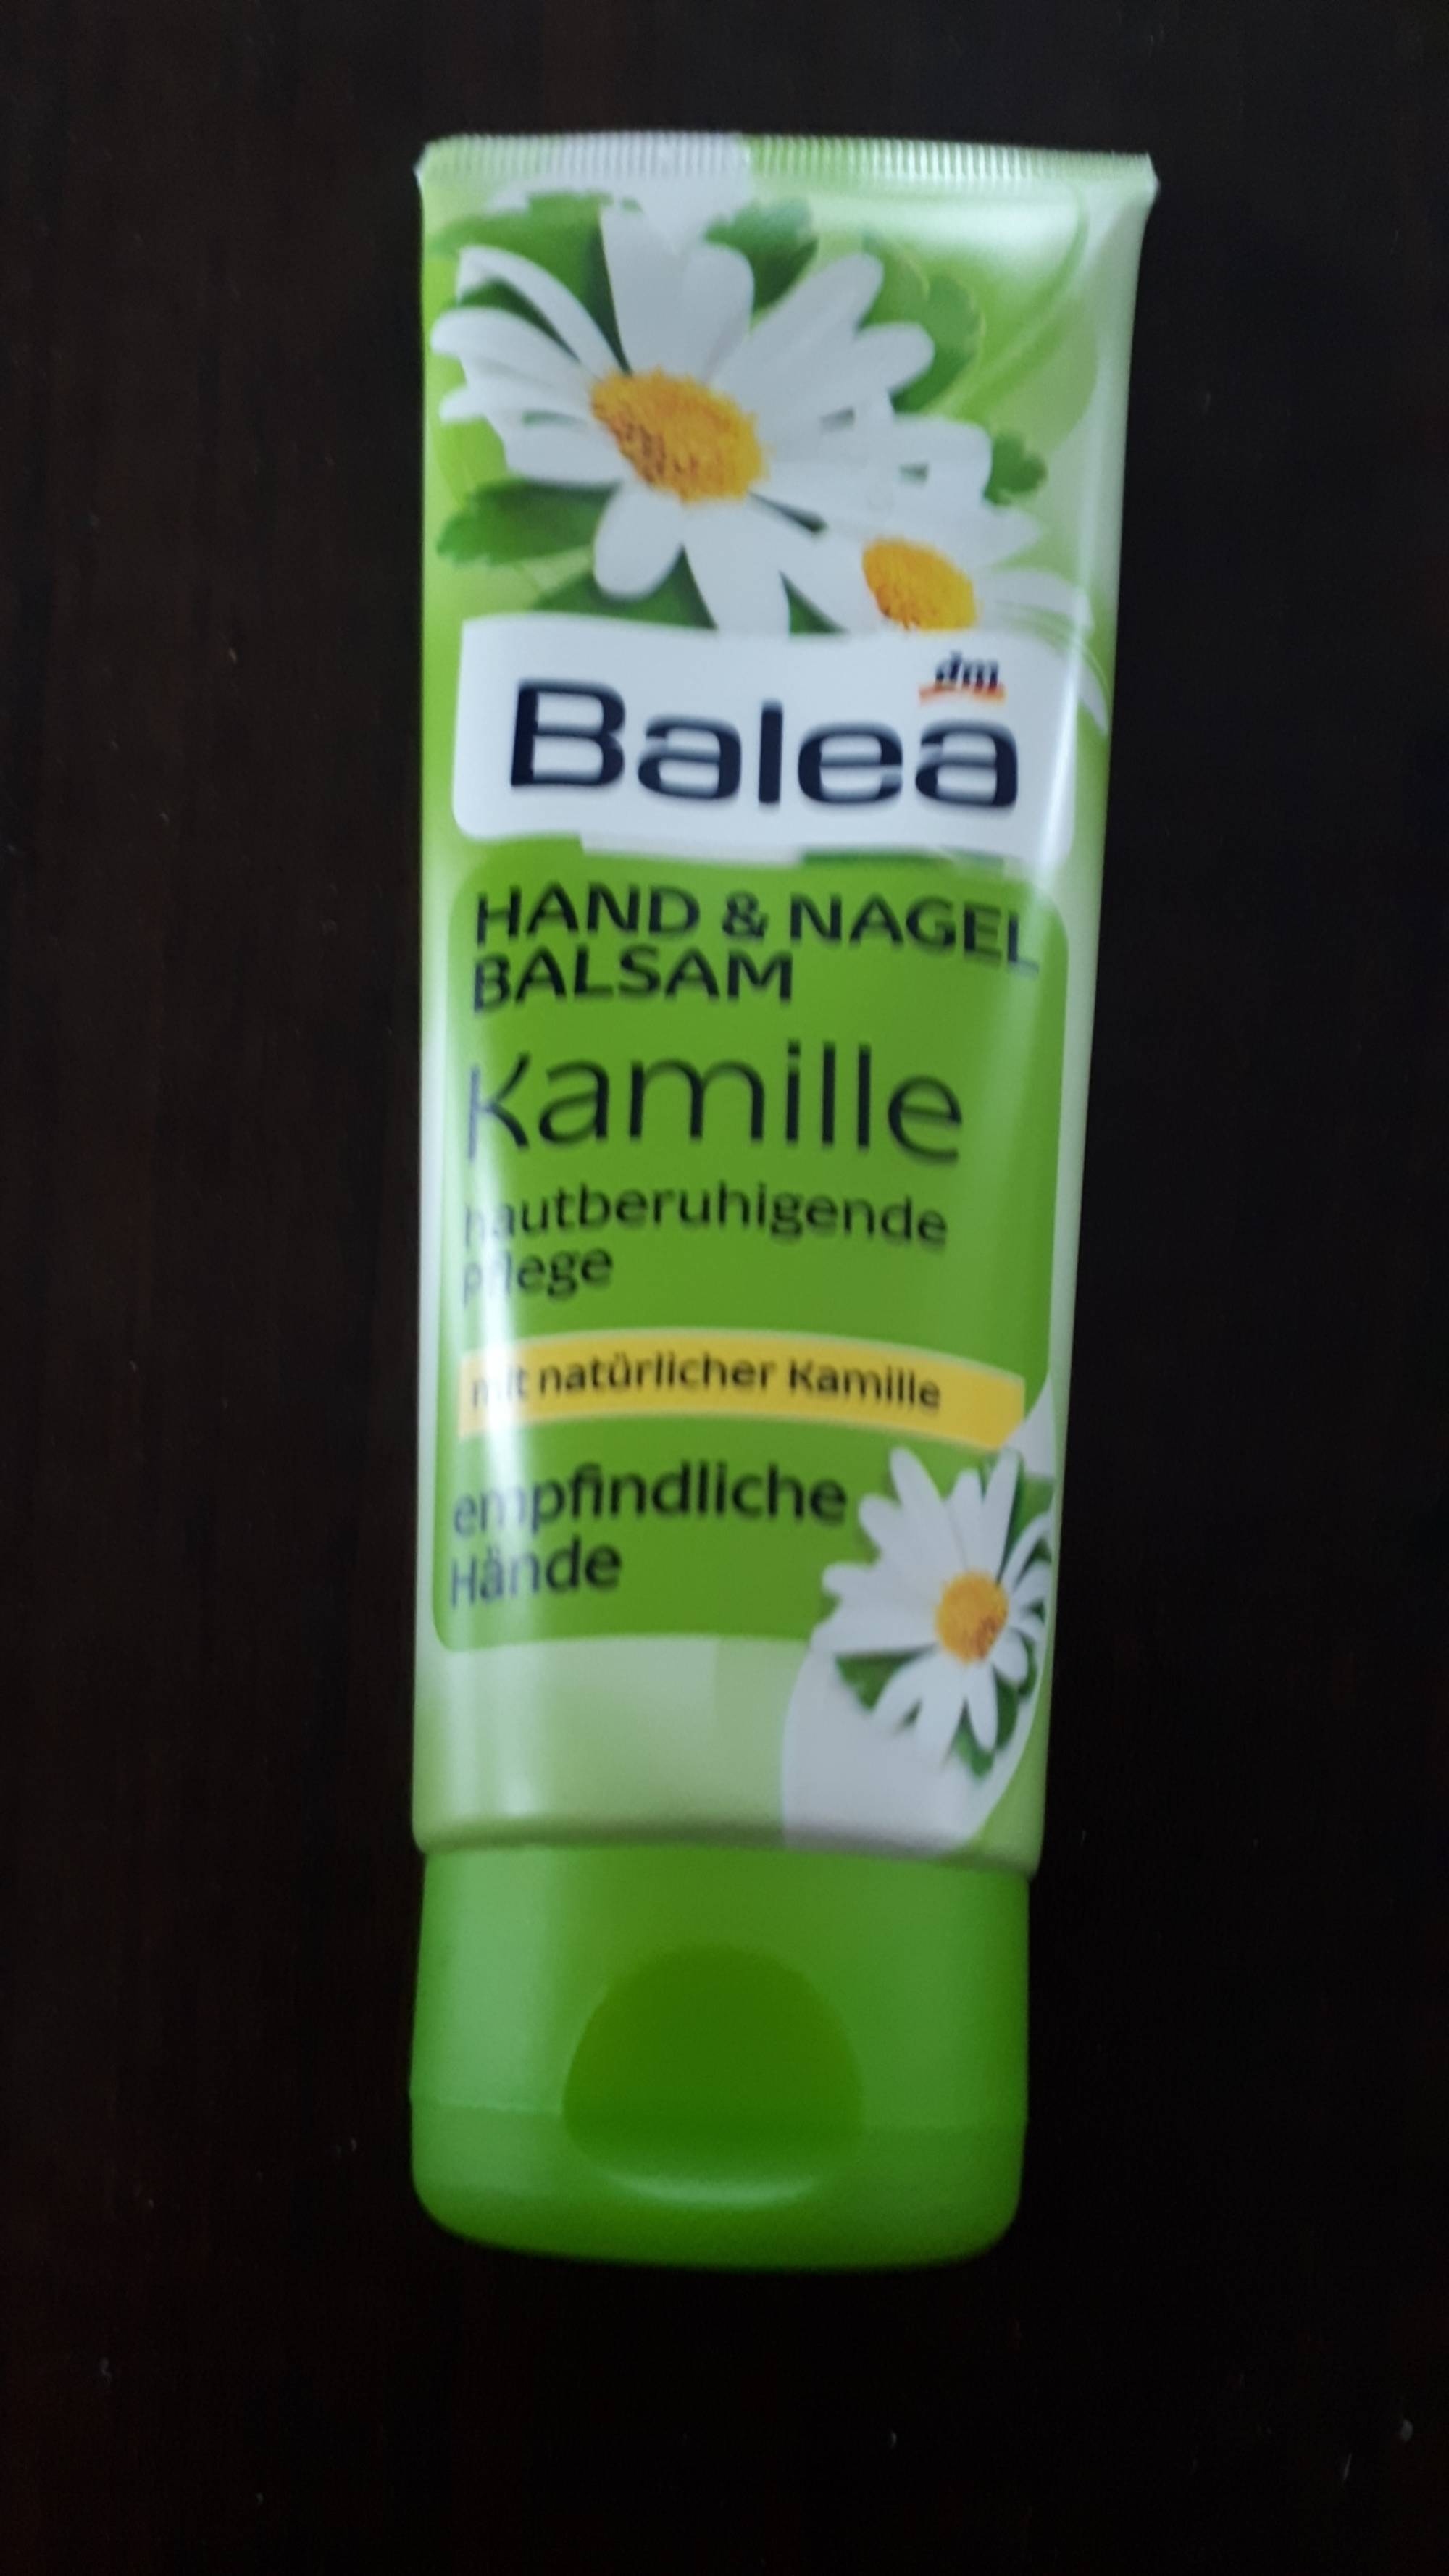 DM BALEA - Hand & Nagel balsam 